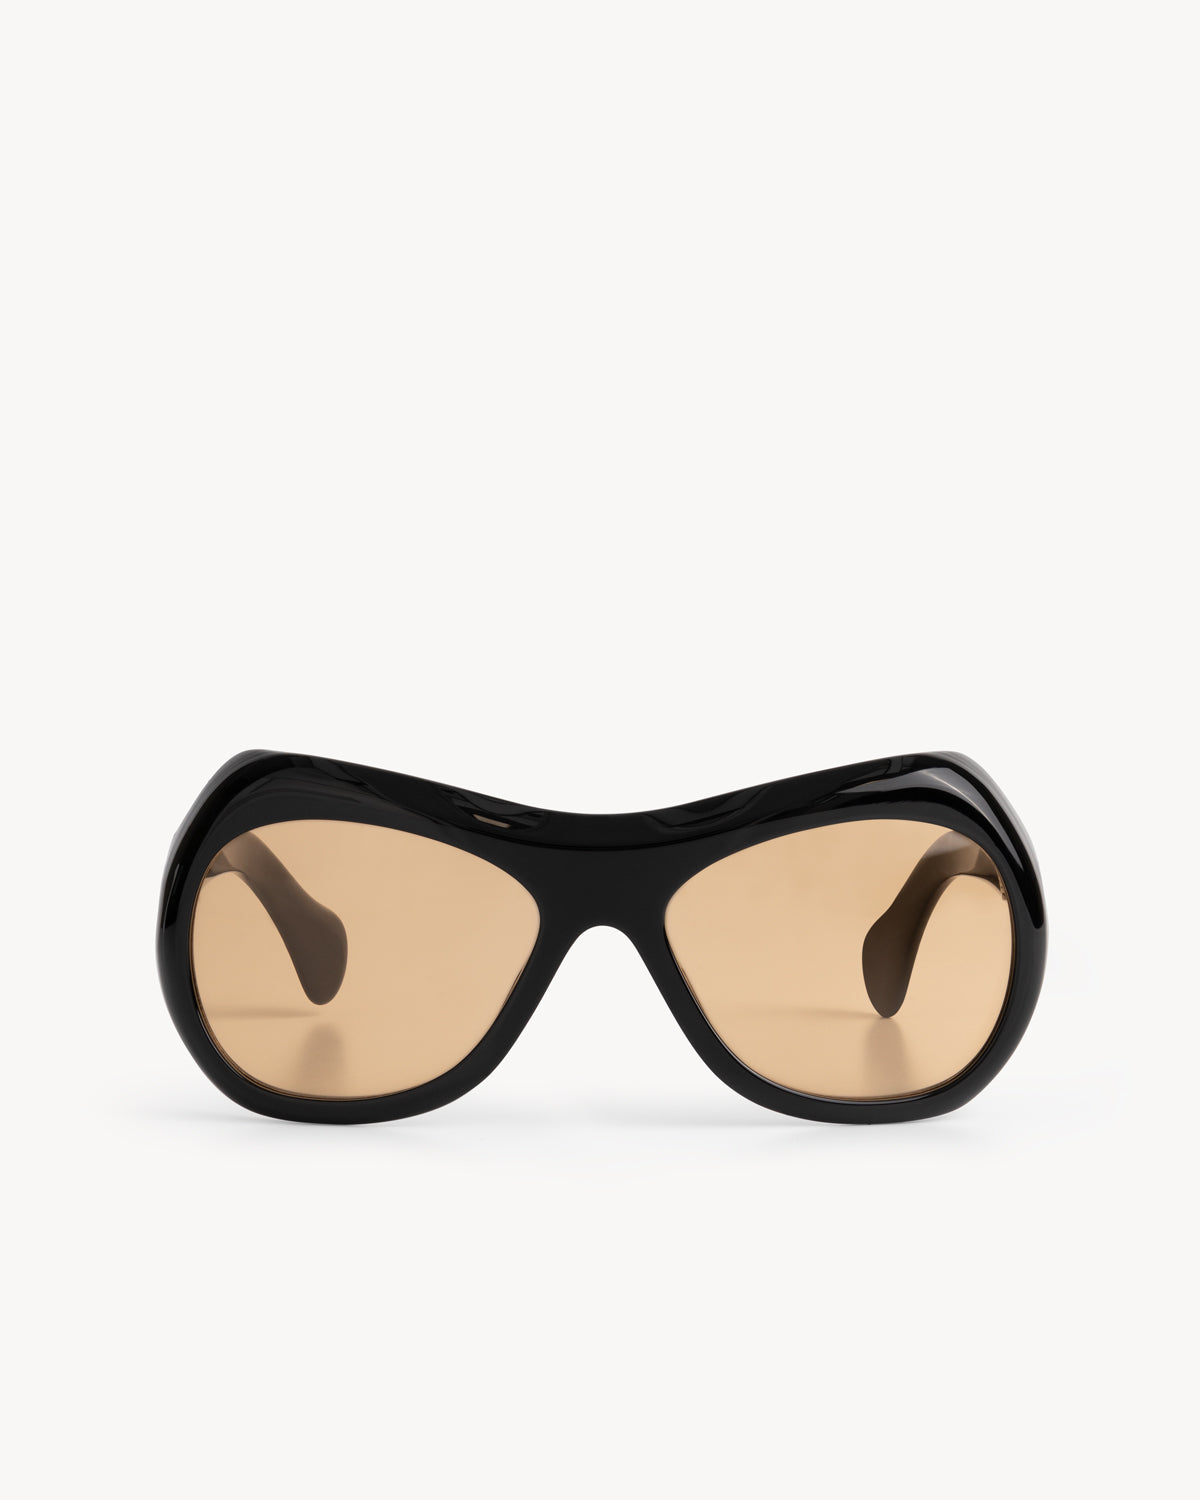 Port Tanger Soledad Sunglasses in Black Acetate and Amber Lenses 1